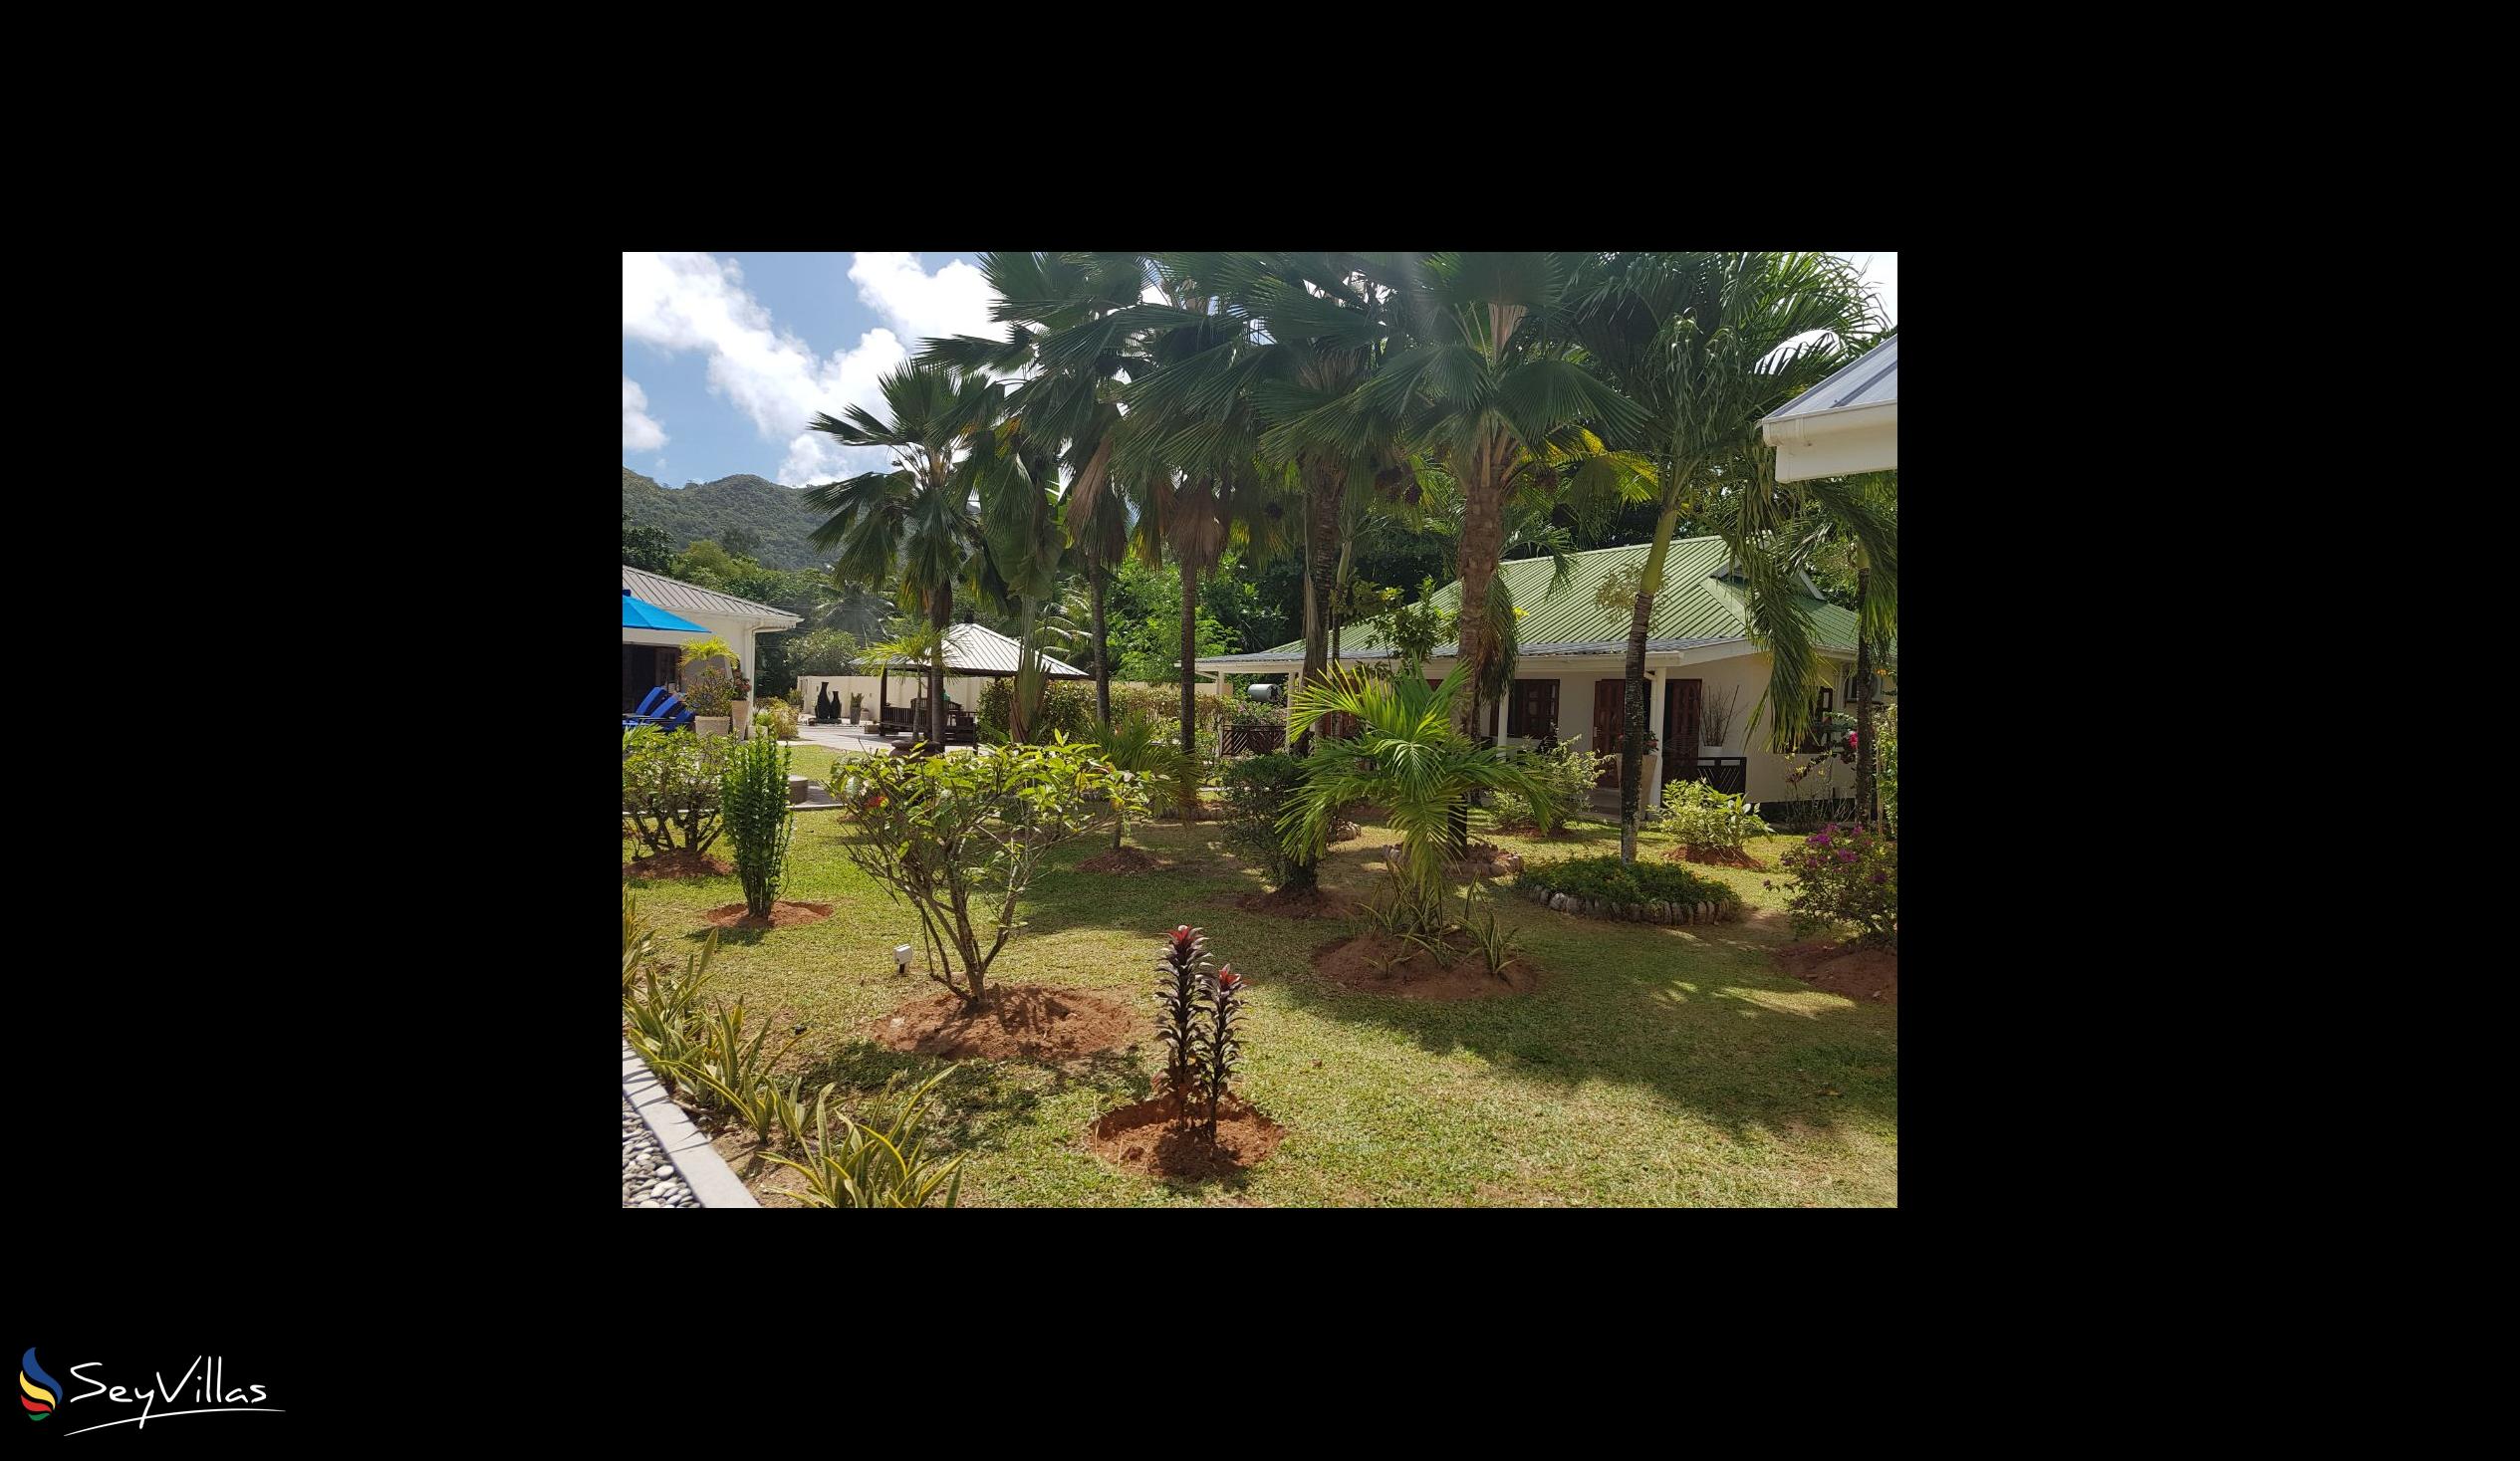 Foto 16: Villas de Mer - Aussenbereich - Praslin (Seychellen)